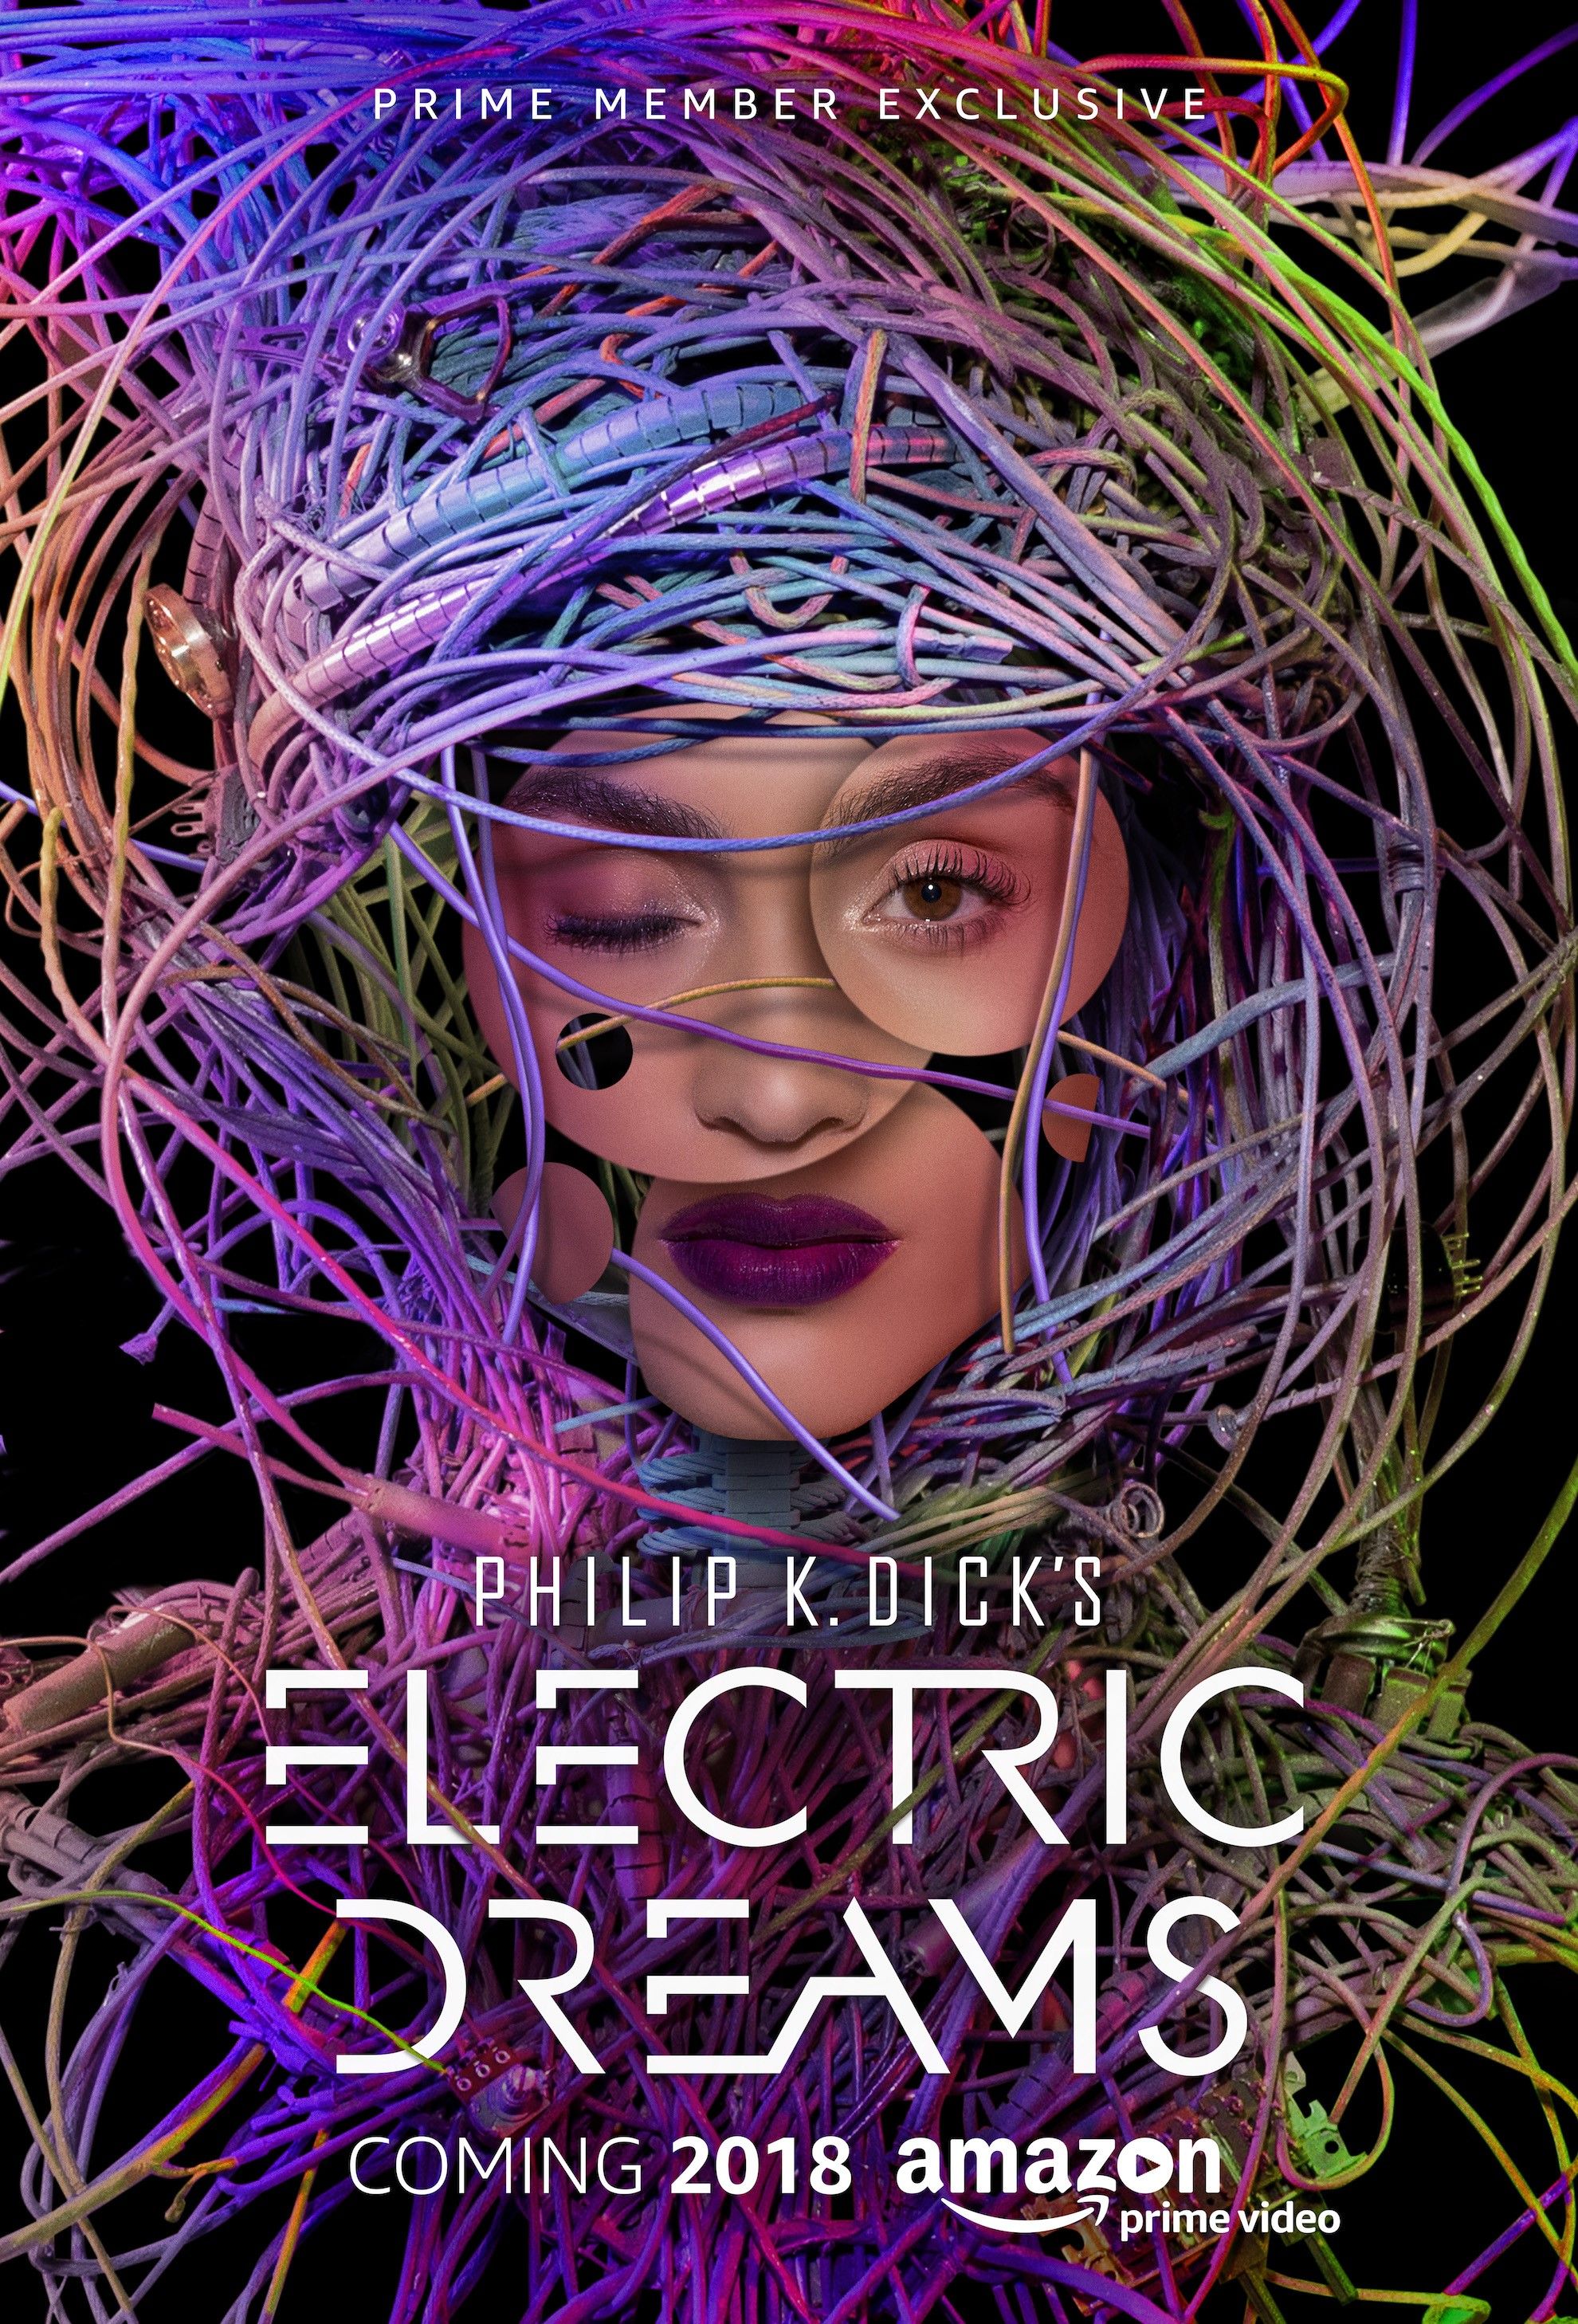 Philip K. Dick's Electric Dreams' gets Amazon Prime premiere date